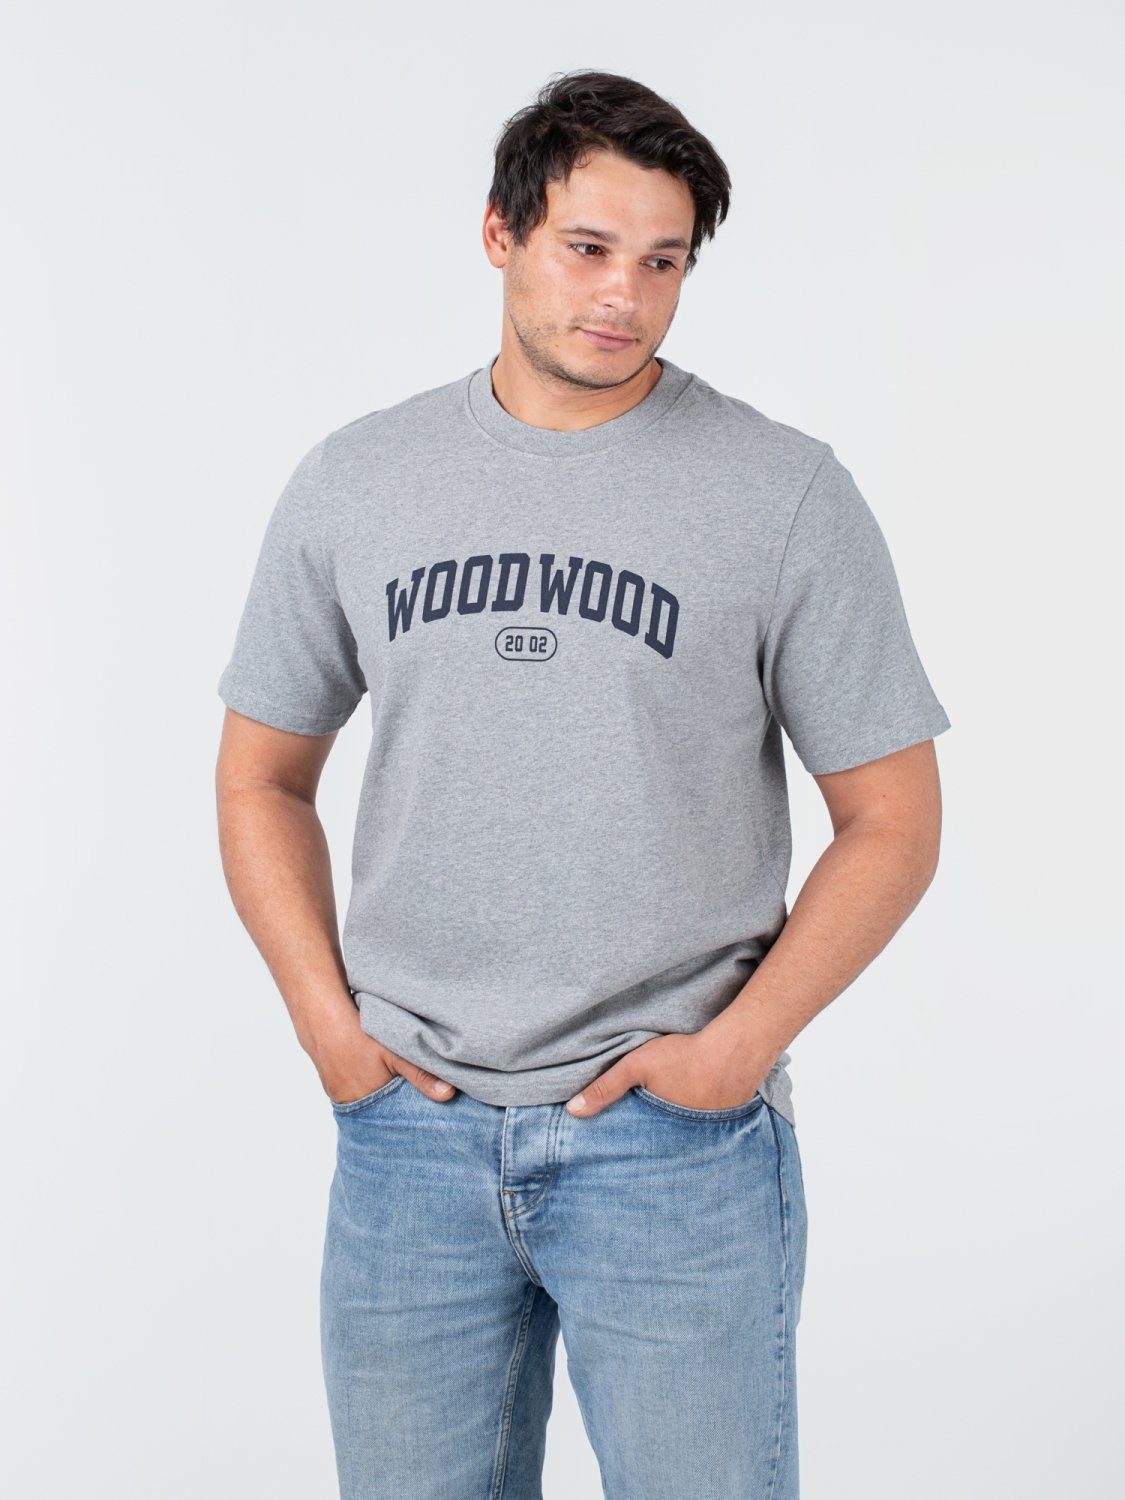 T-Shirt Tee IVY Bobby Wood Melange WOOD Grey WOOD Wood